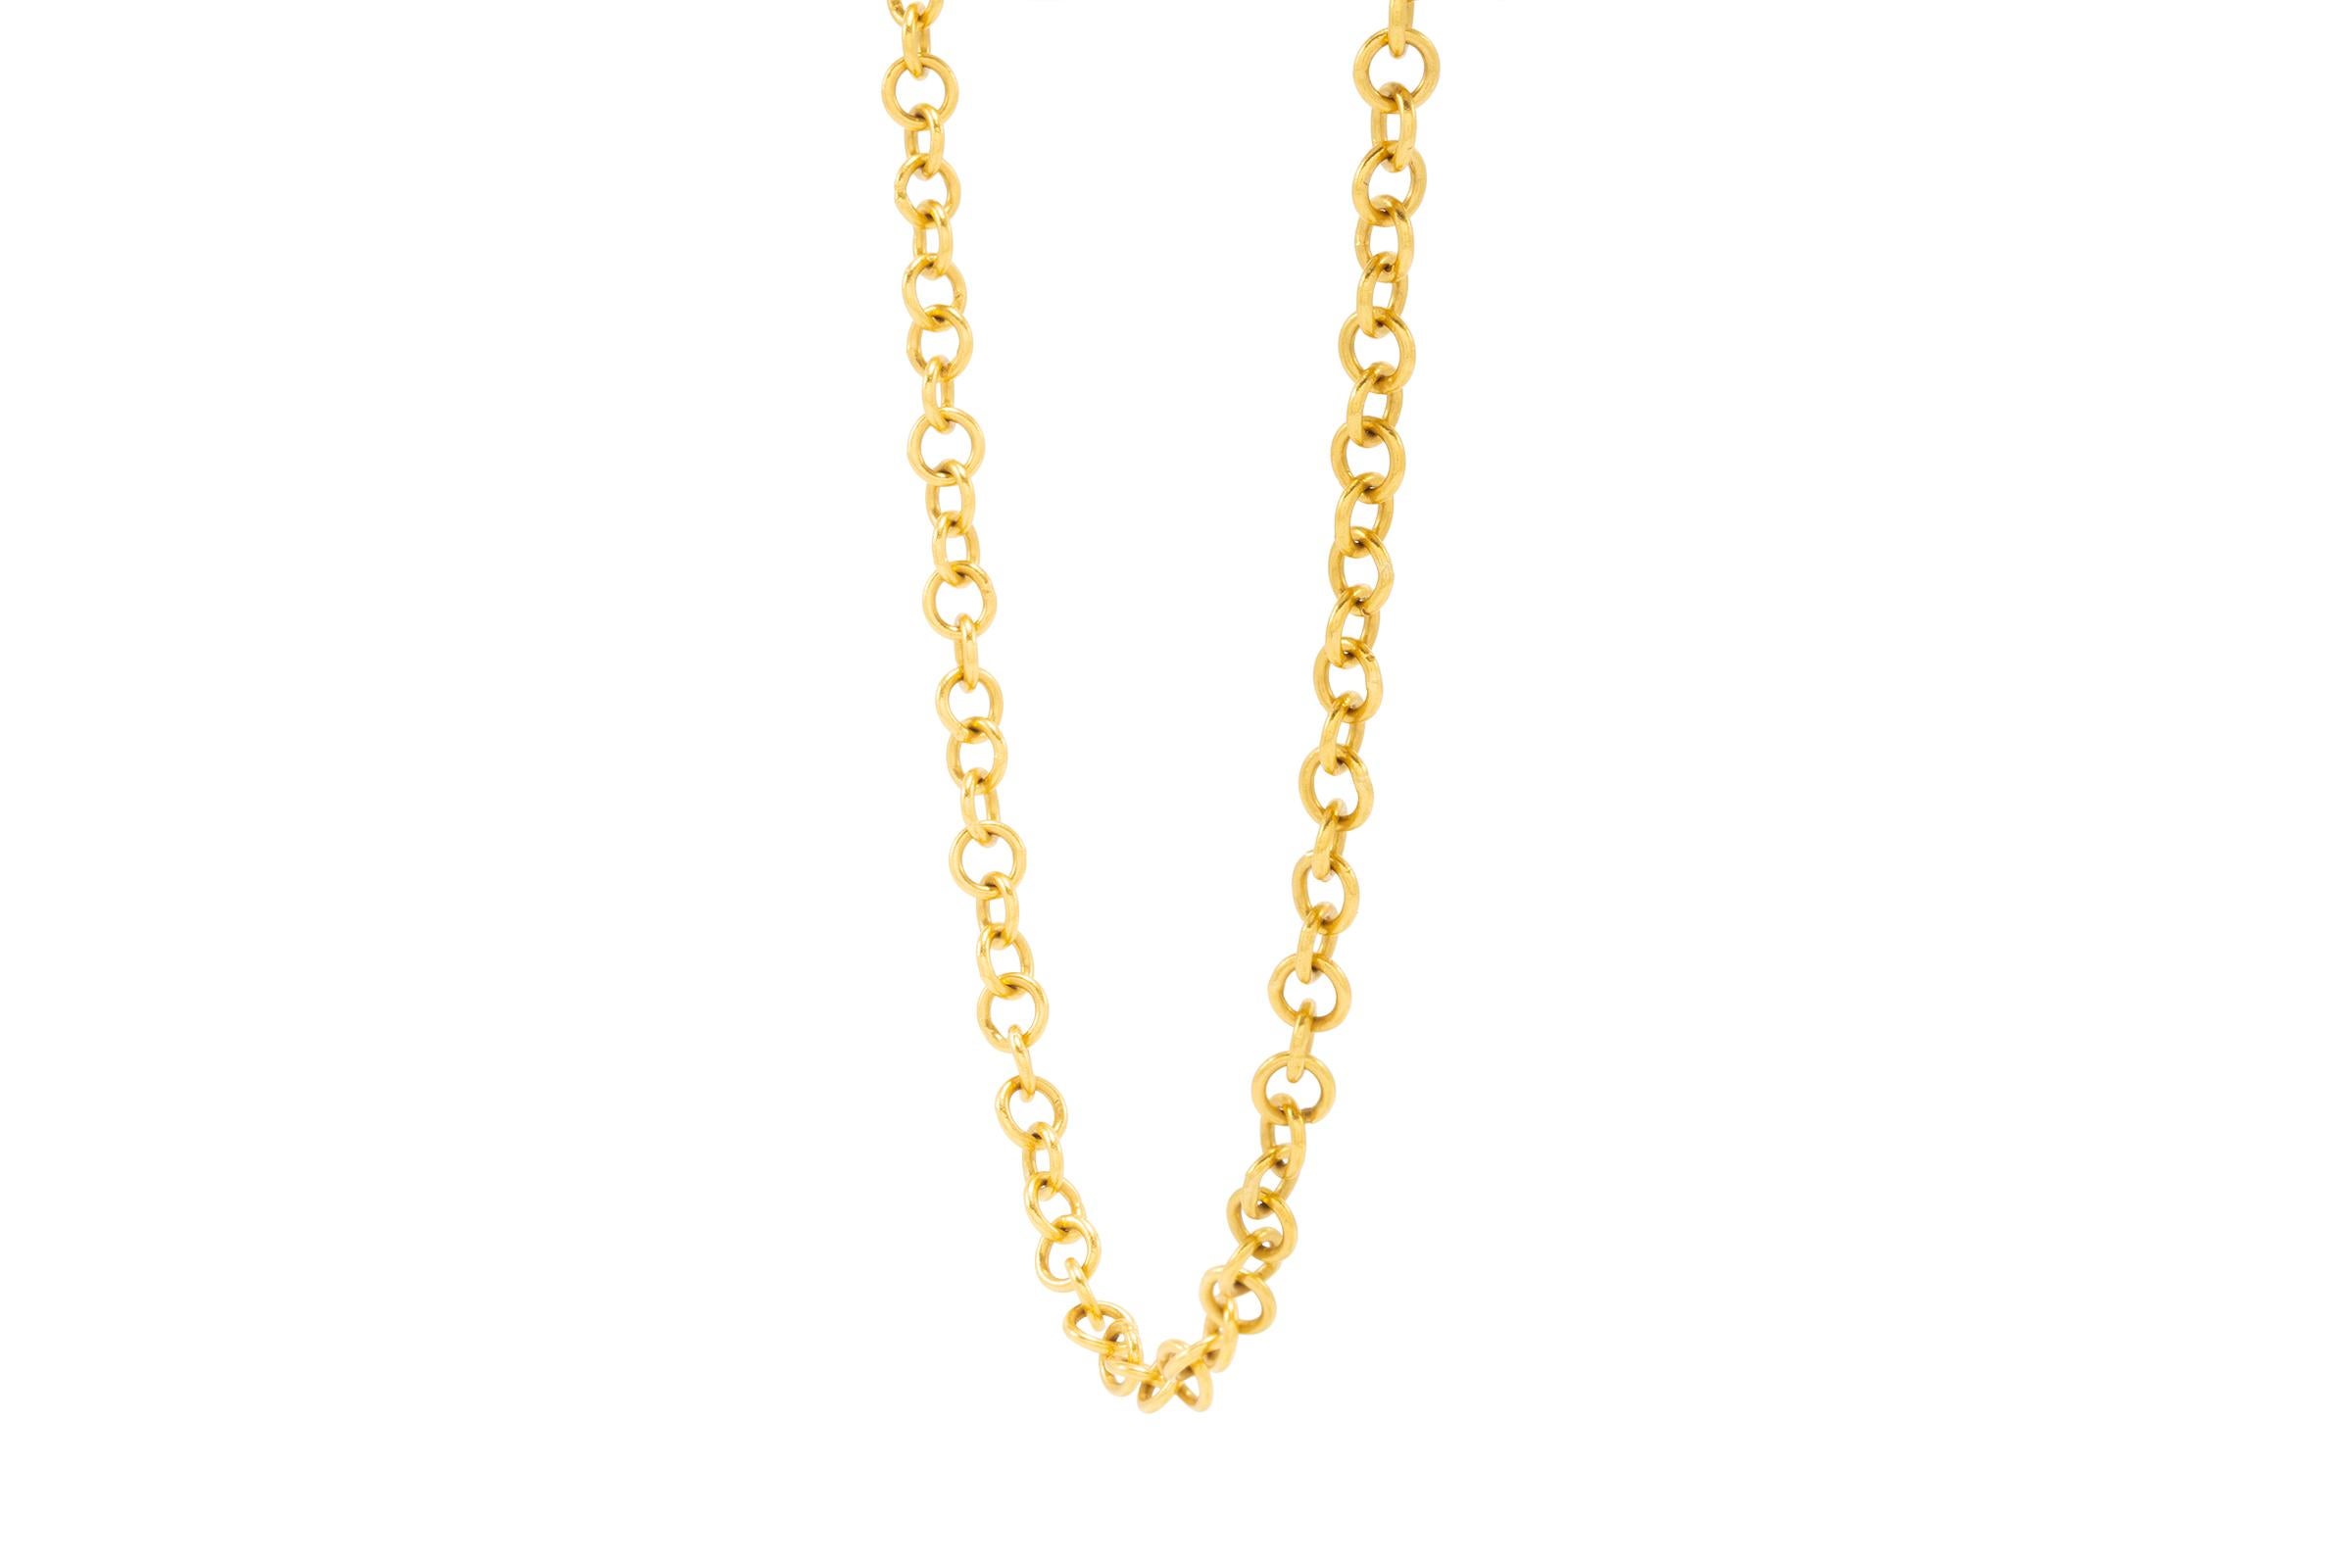 40g gold chain design